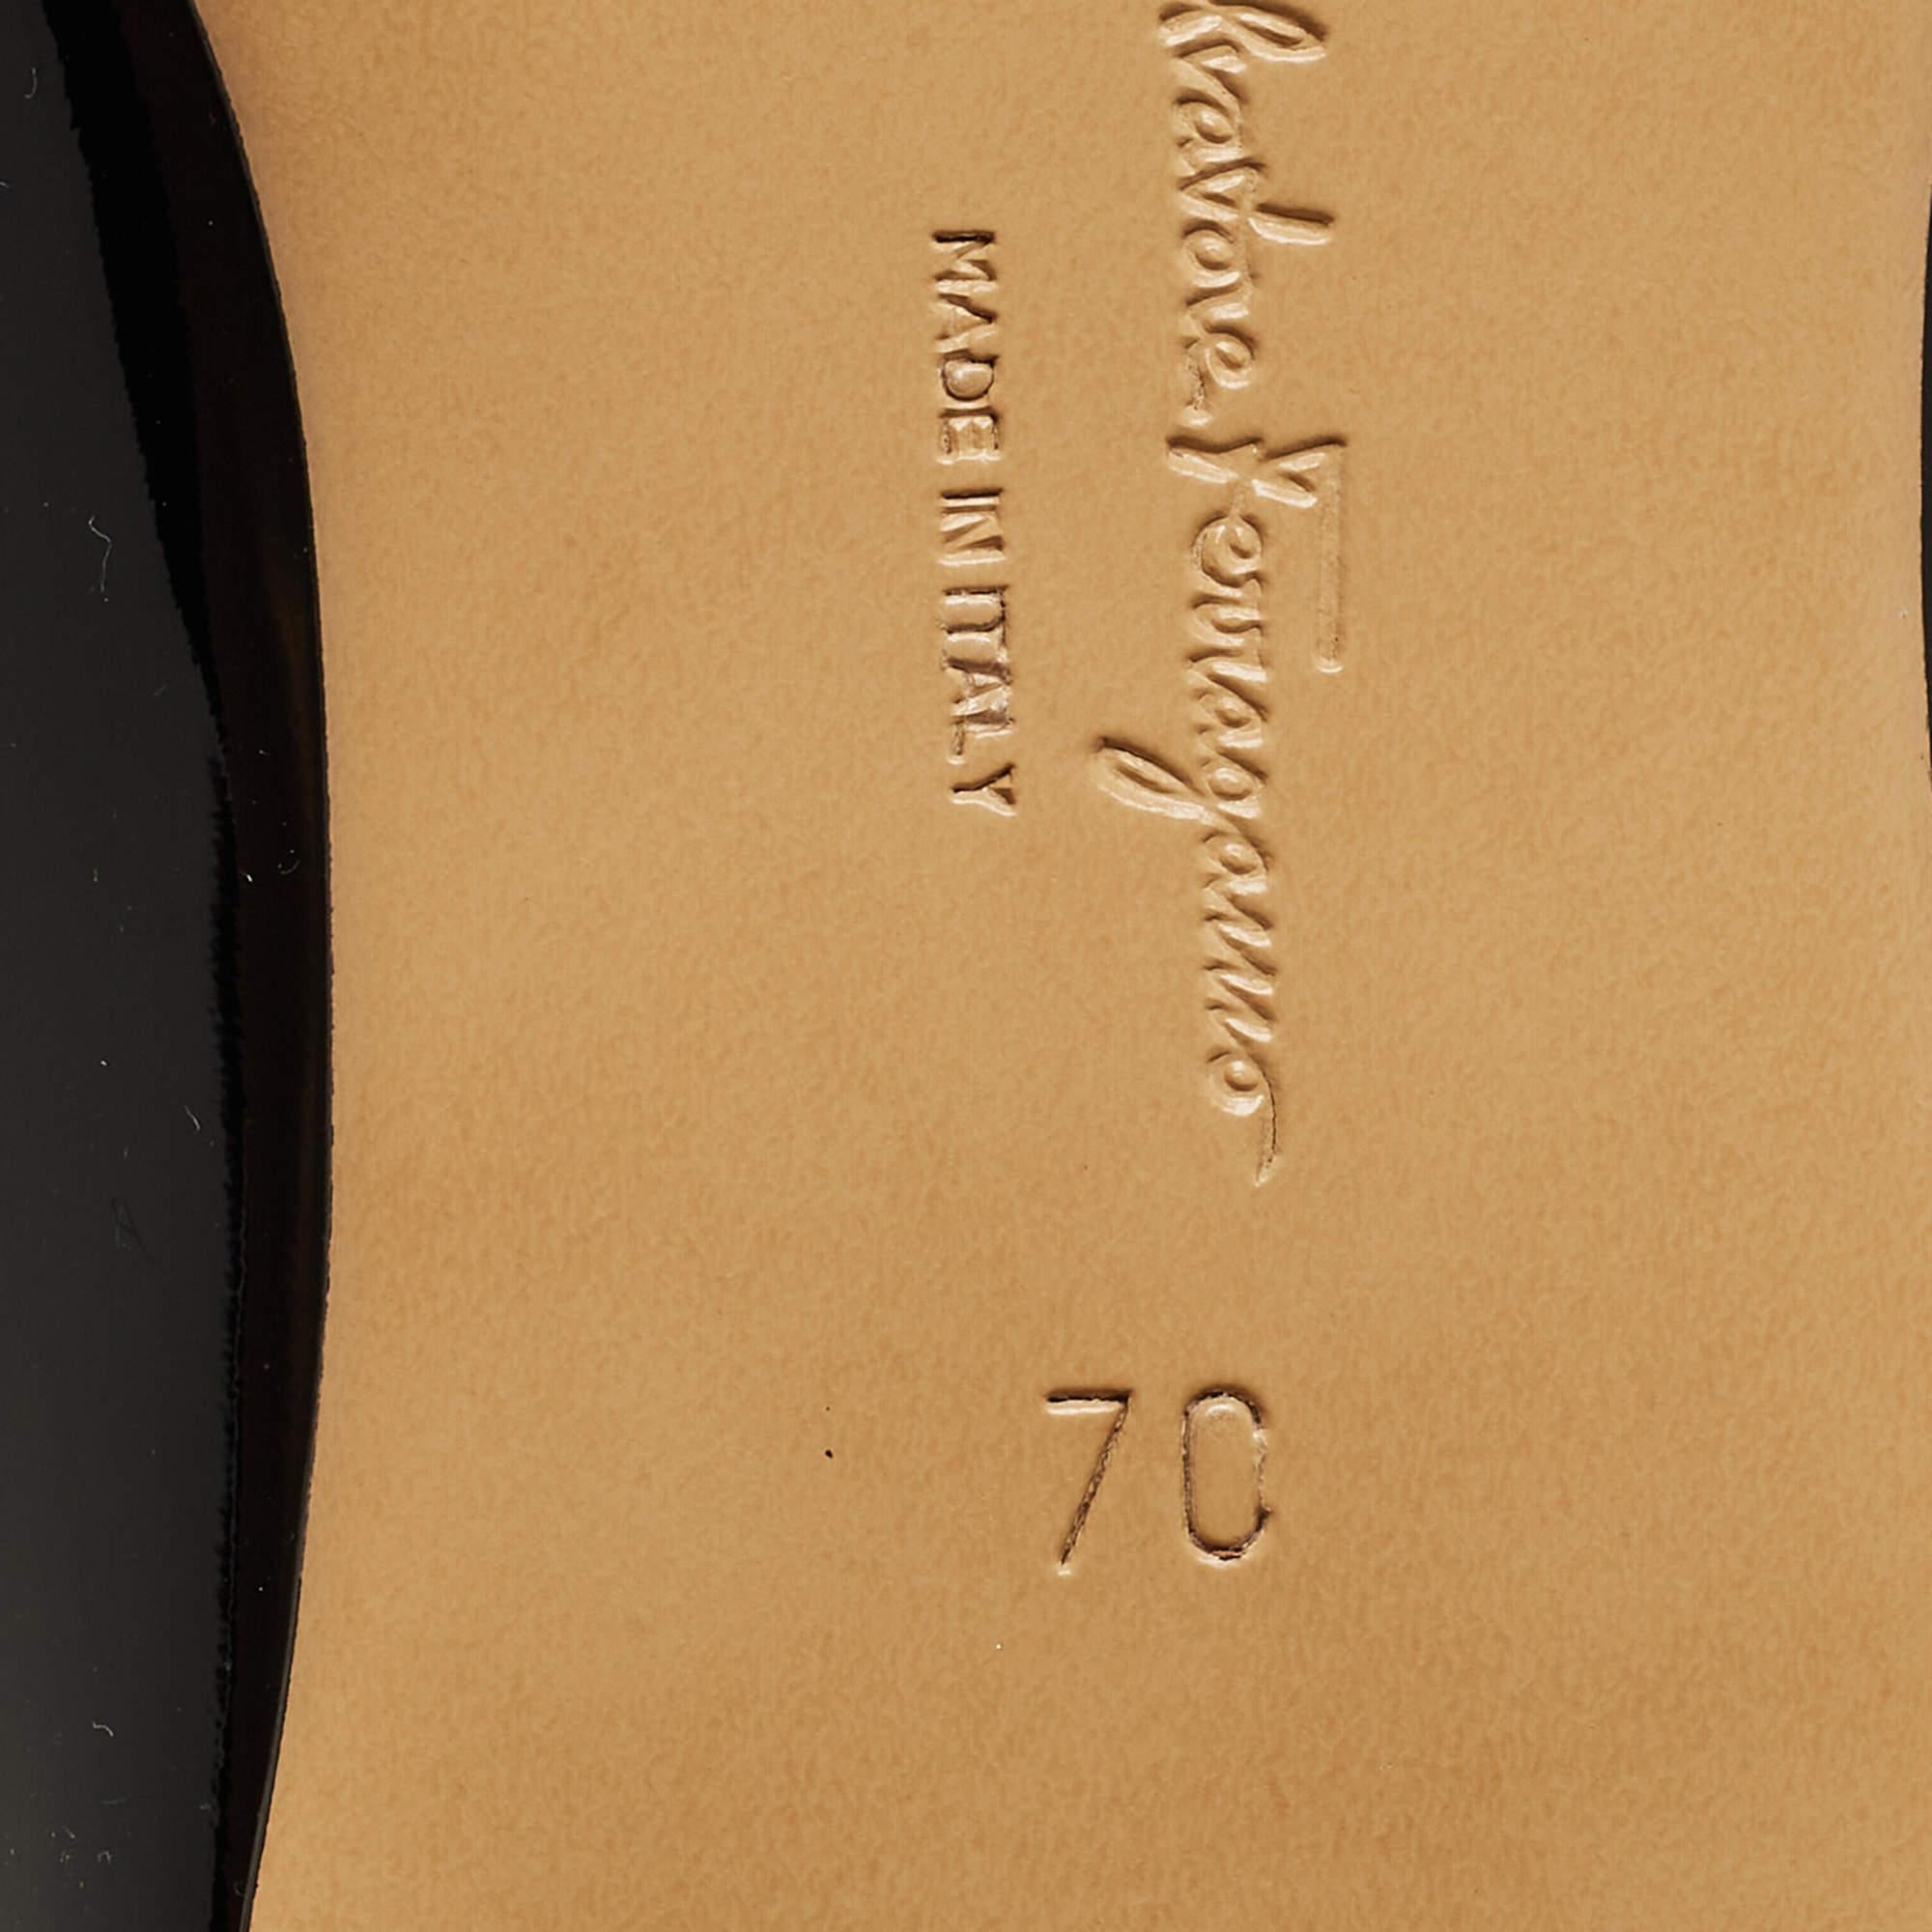 Salvatore Ferragamo Black Patent Leather Varina Ballet Flats Size 37.5 1